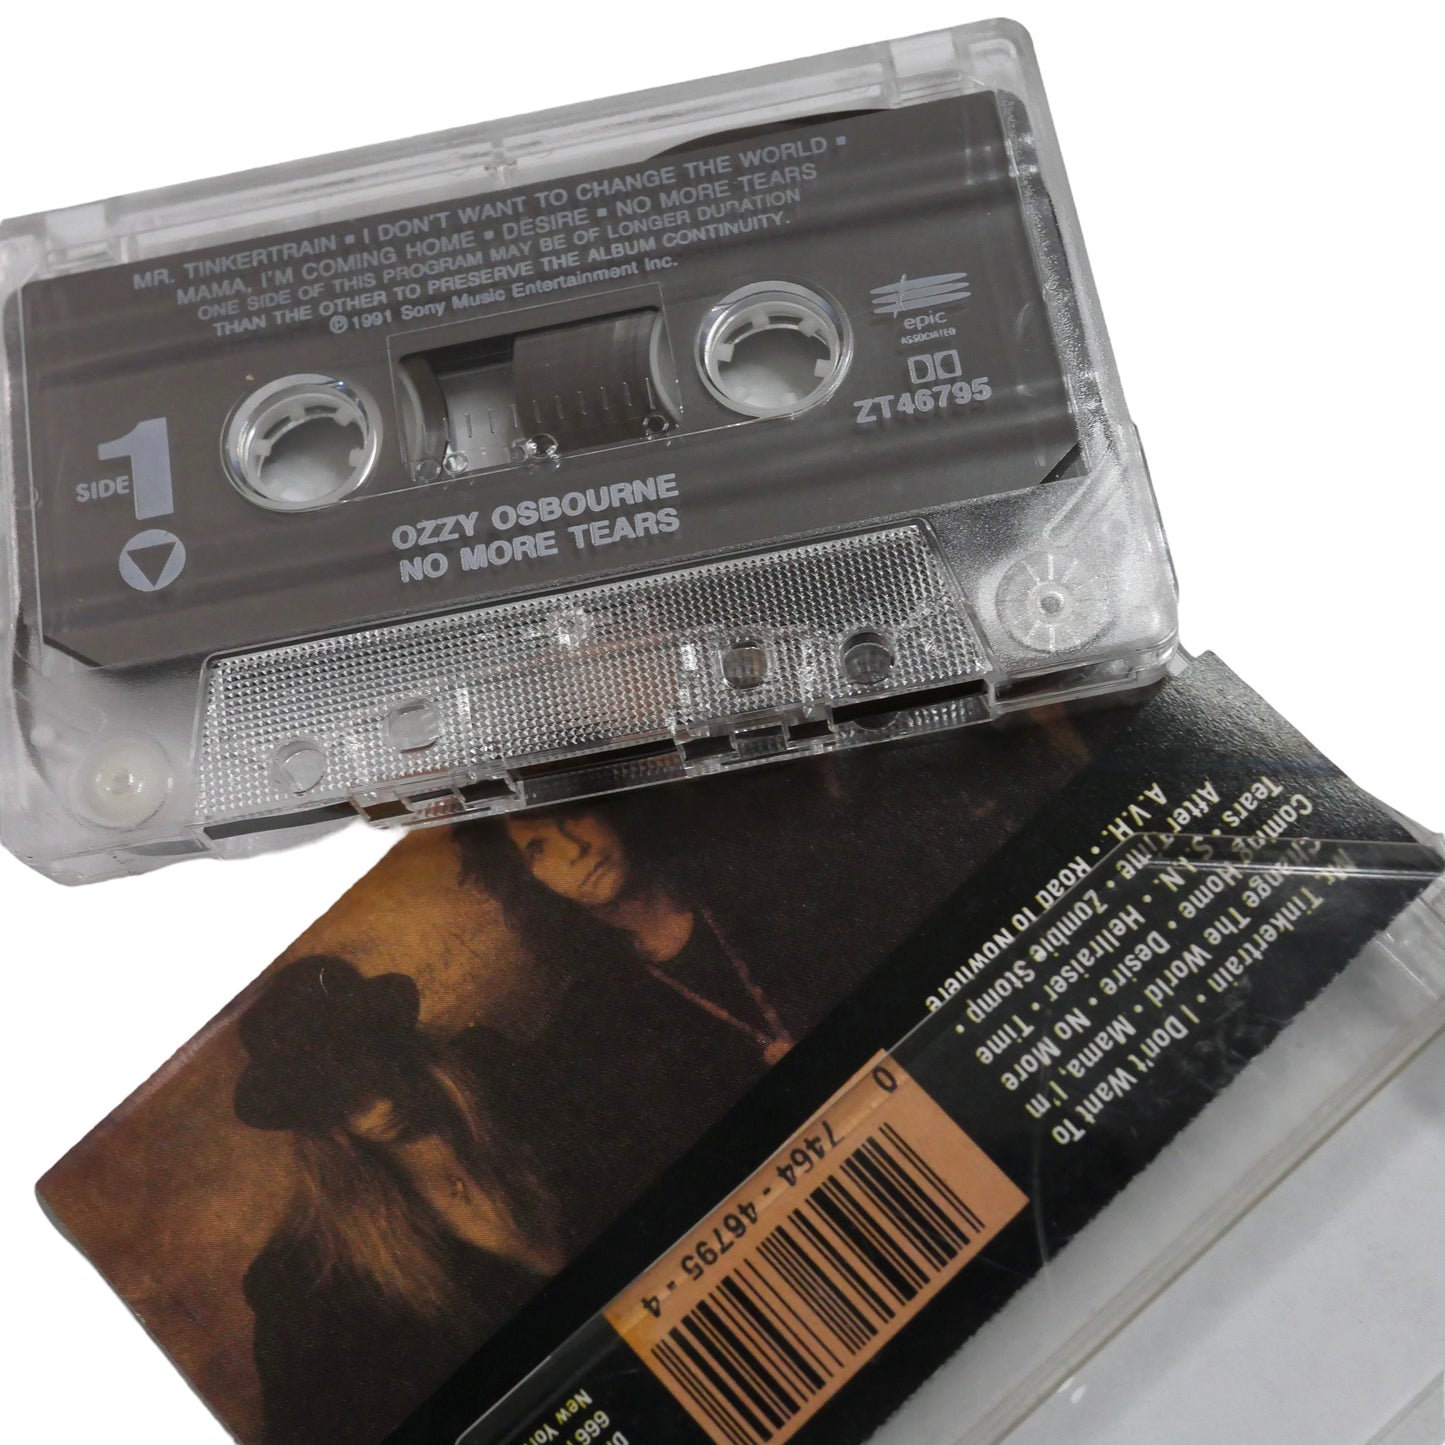 Ozzy Osbourne No More Tears Cassette